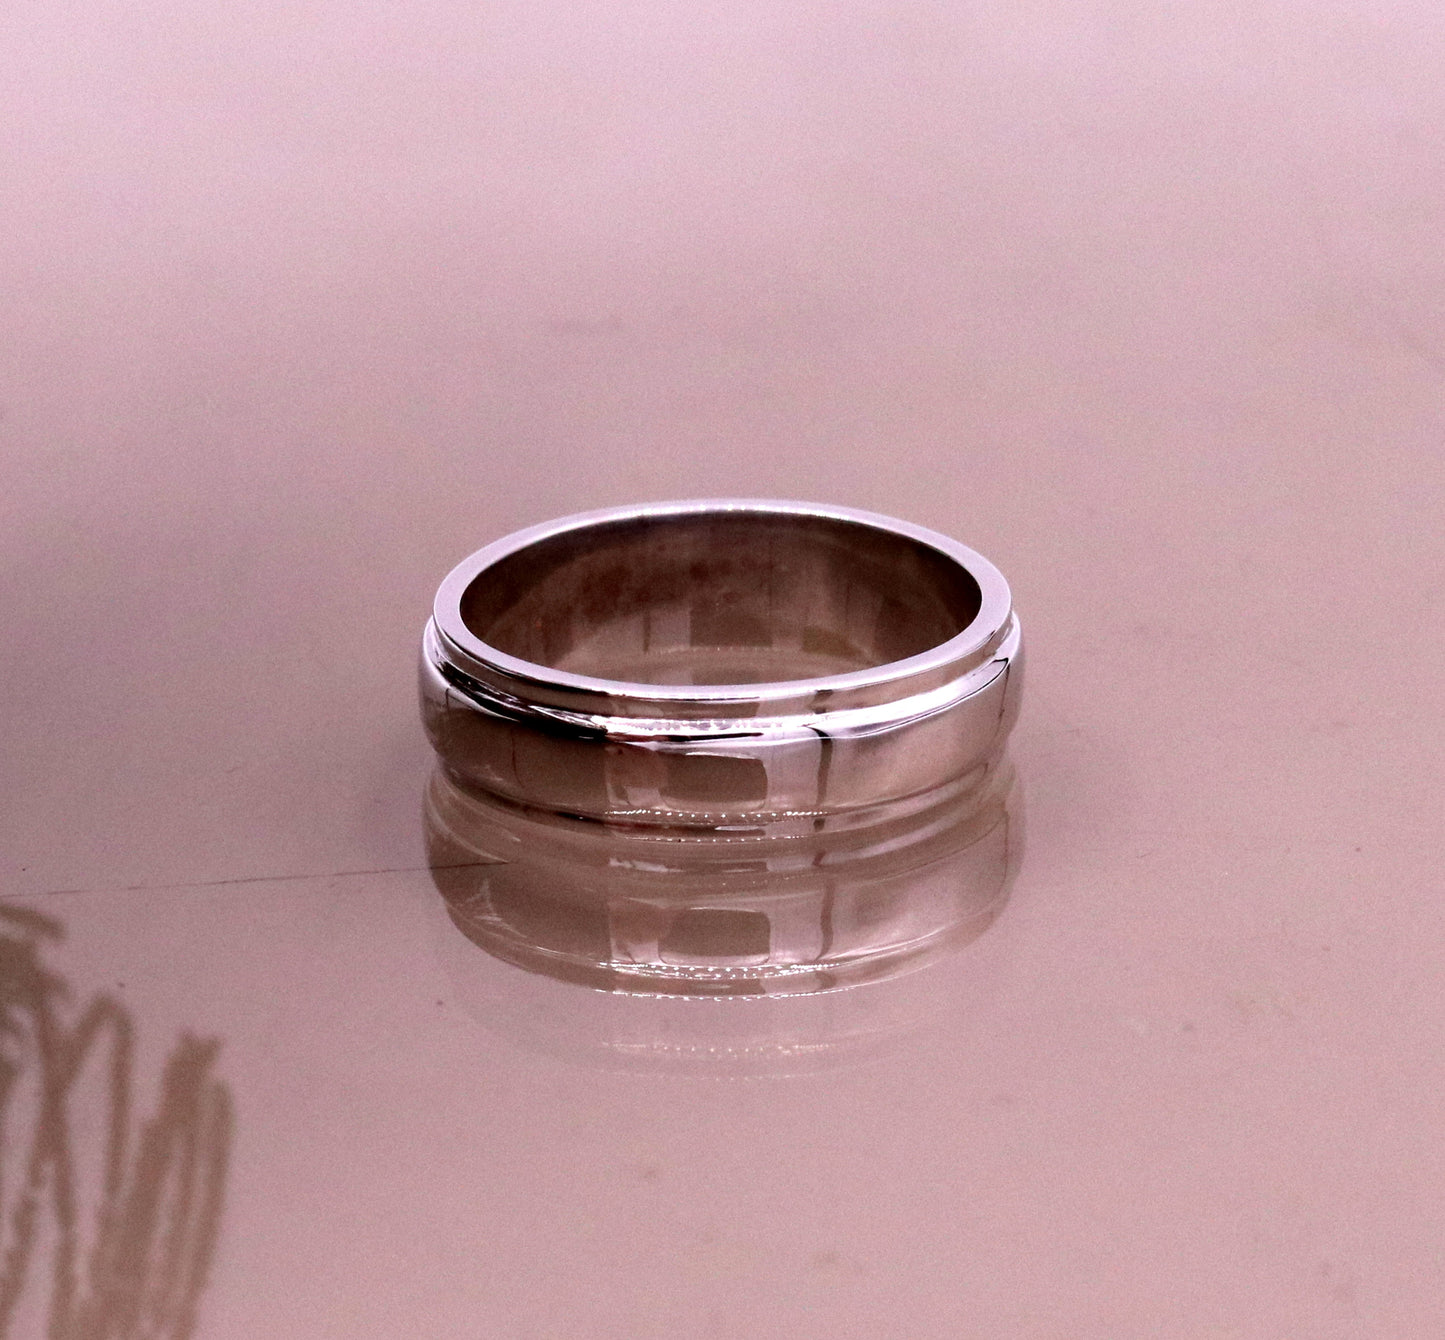 14 karat white gold handmade plain ring band for wedding anniversary engagement gifting unisex stylish genuine jewelry ring23 - TRIBAL ORNAMENTS